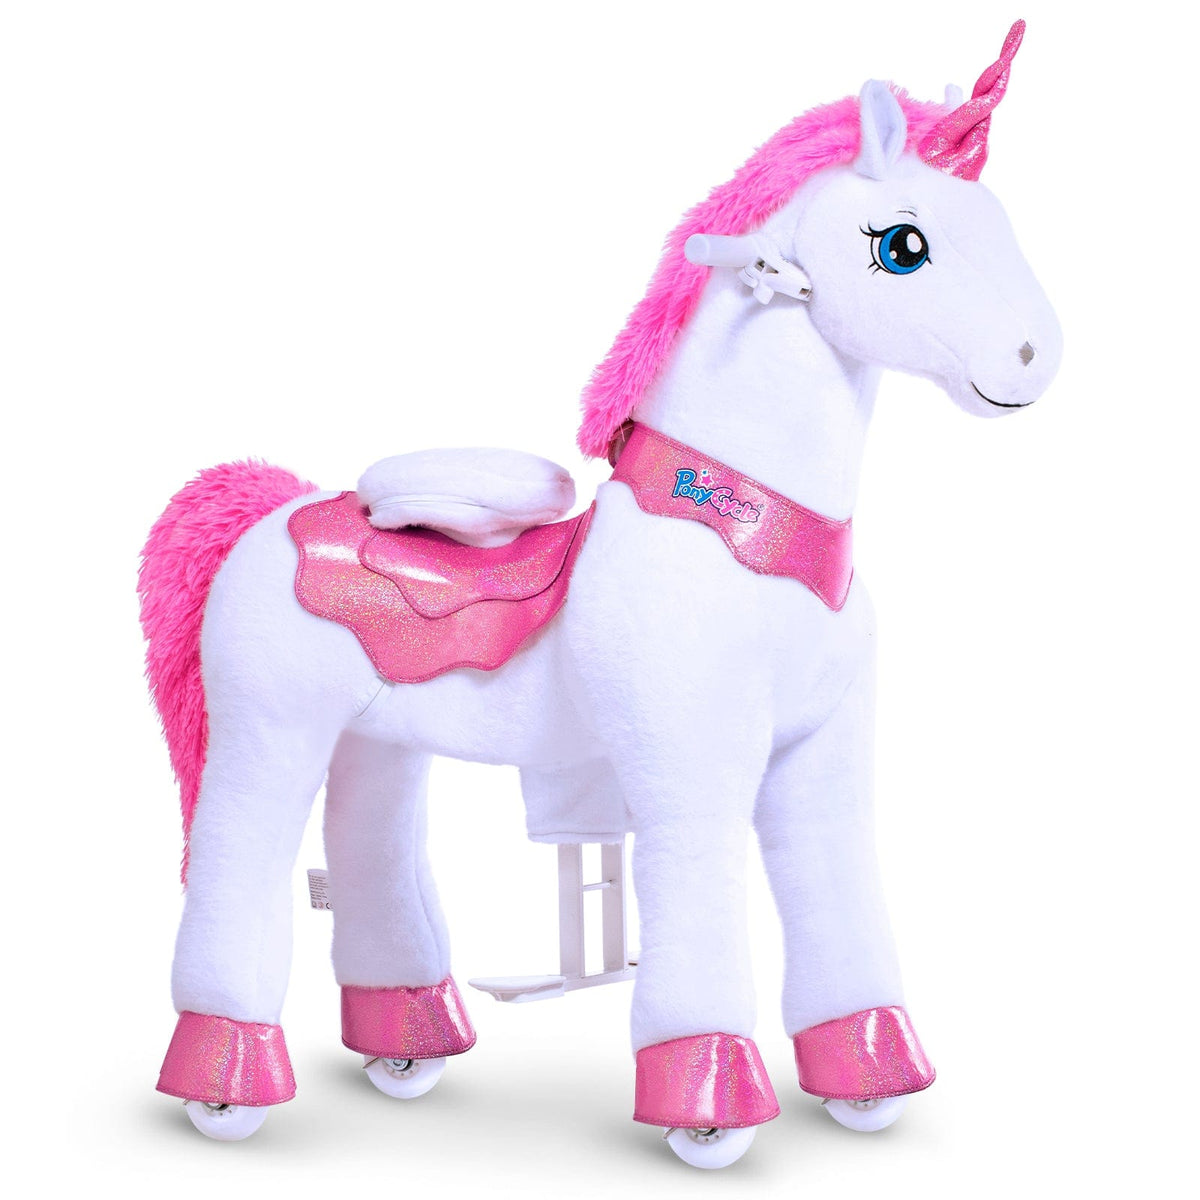 riding unicorn toy